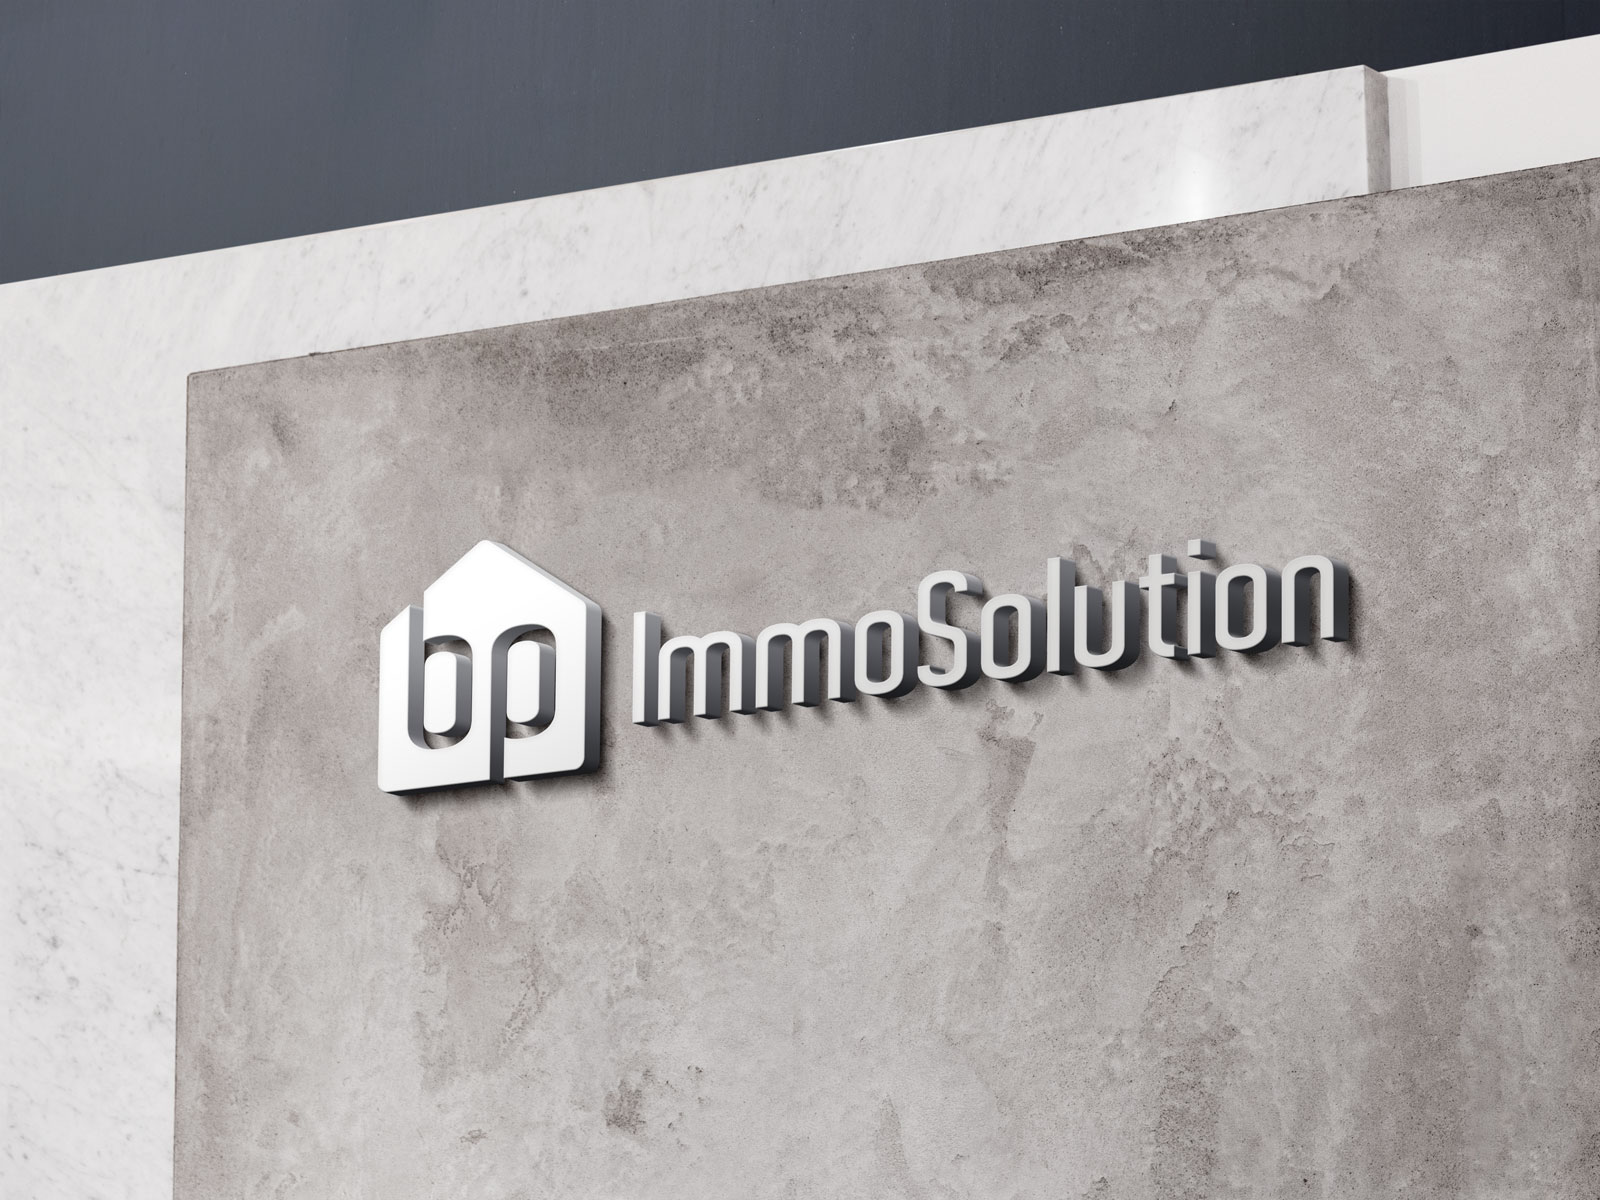 Logo b+p ImmoSolution